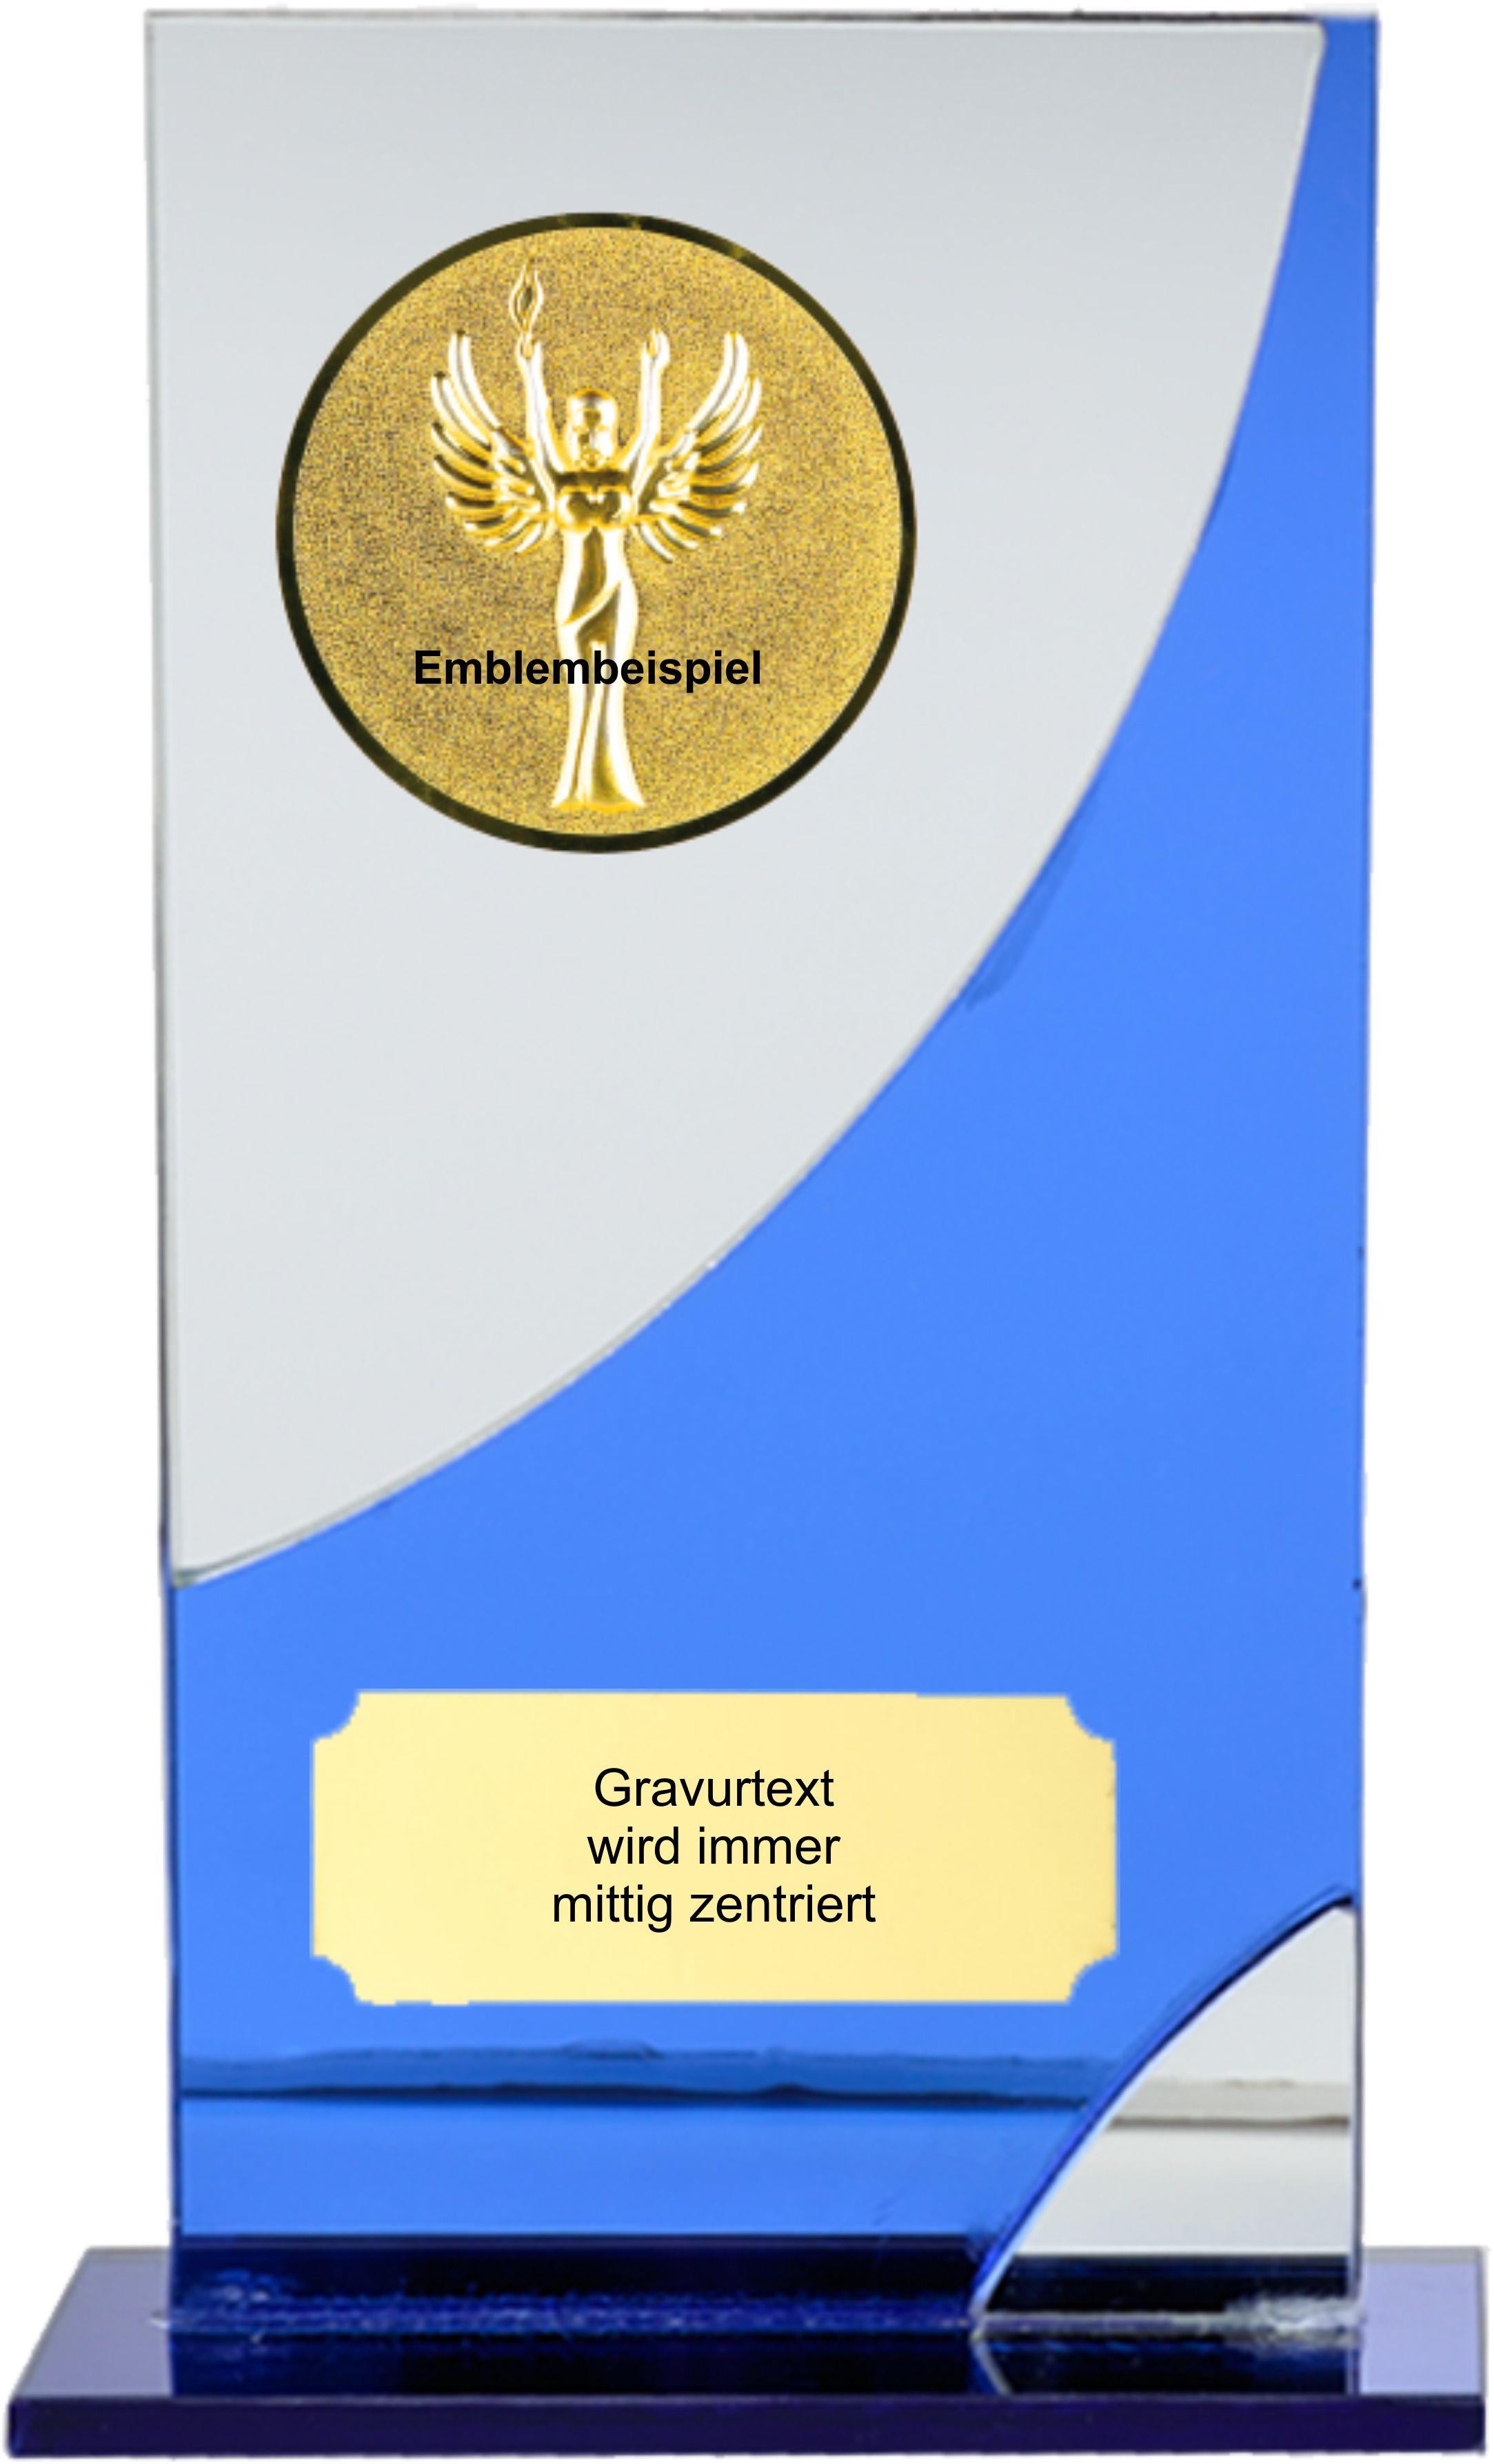 Spiegel-Glas-Pokal 147-35 inkl. Emblem und Gravur #1 18 cm 